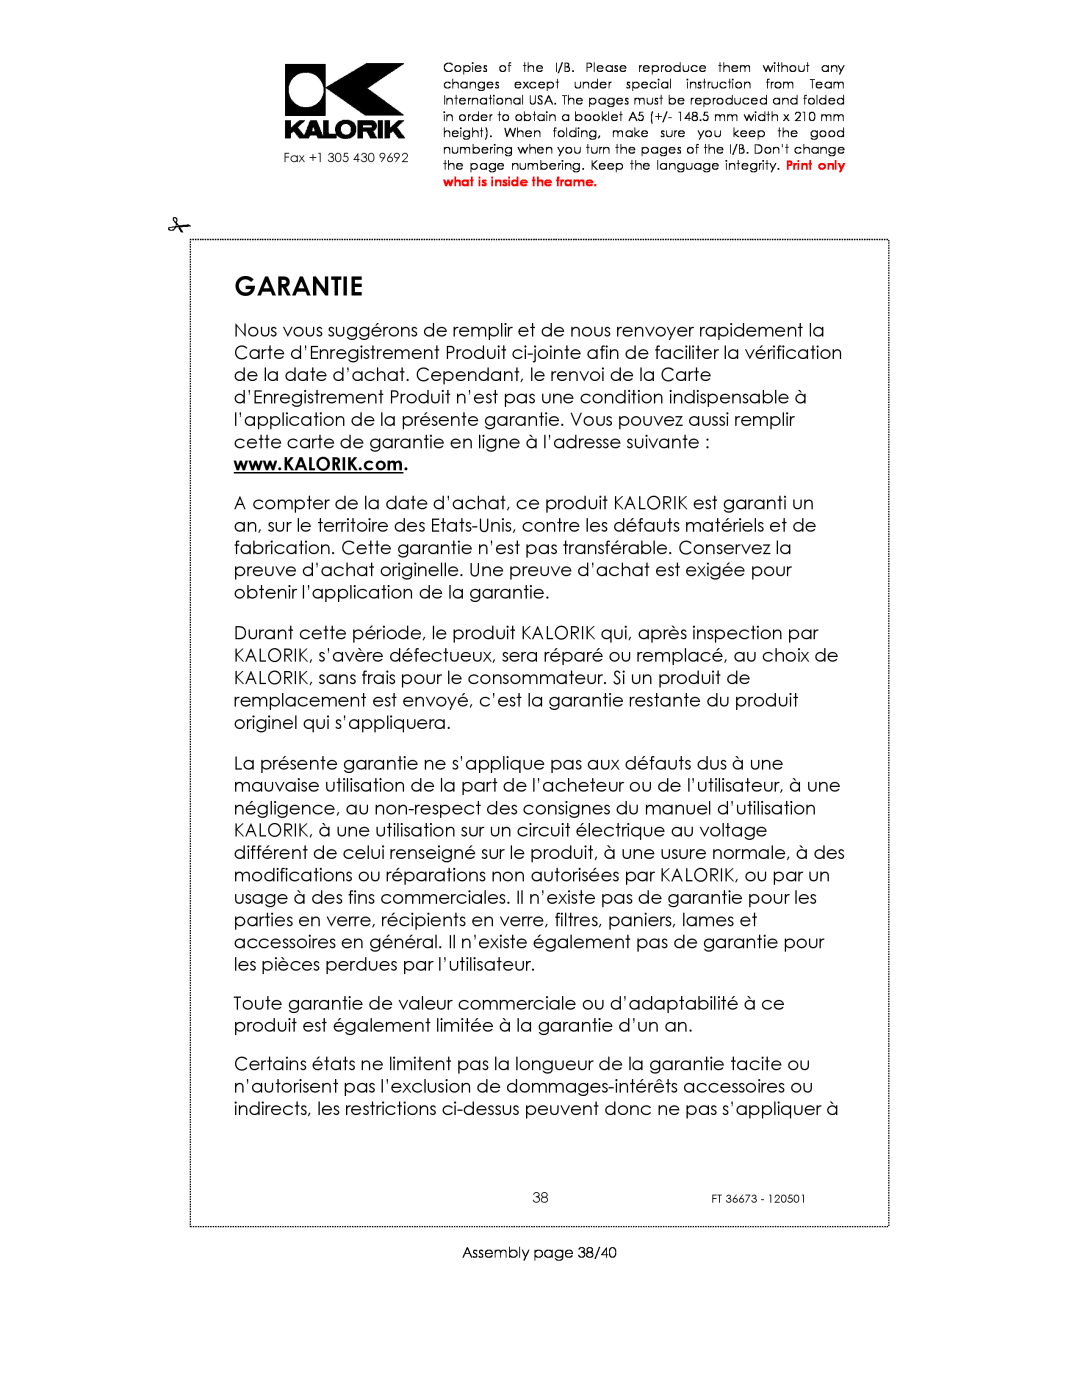 Kalorik USK FT 36673 manual Garantie, Assembly page 38/40 